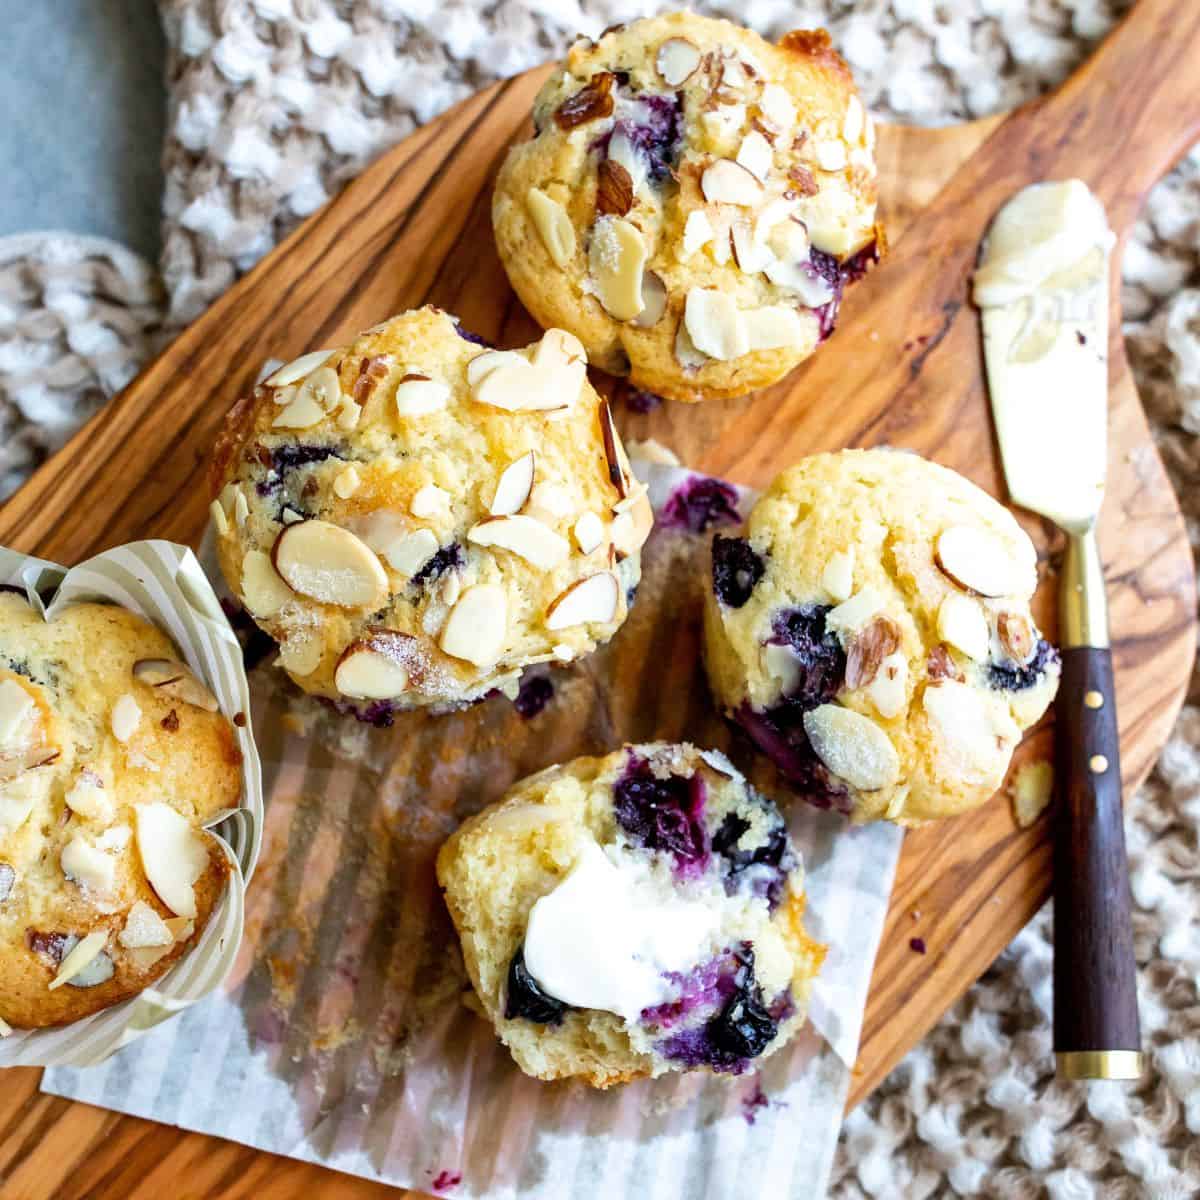 Blueberry yogurt muffins on a cutting board with a knife.